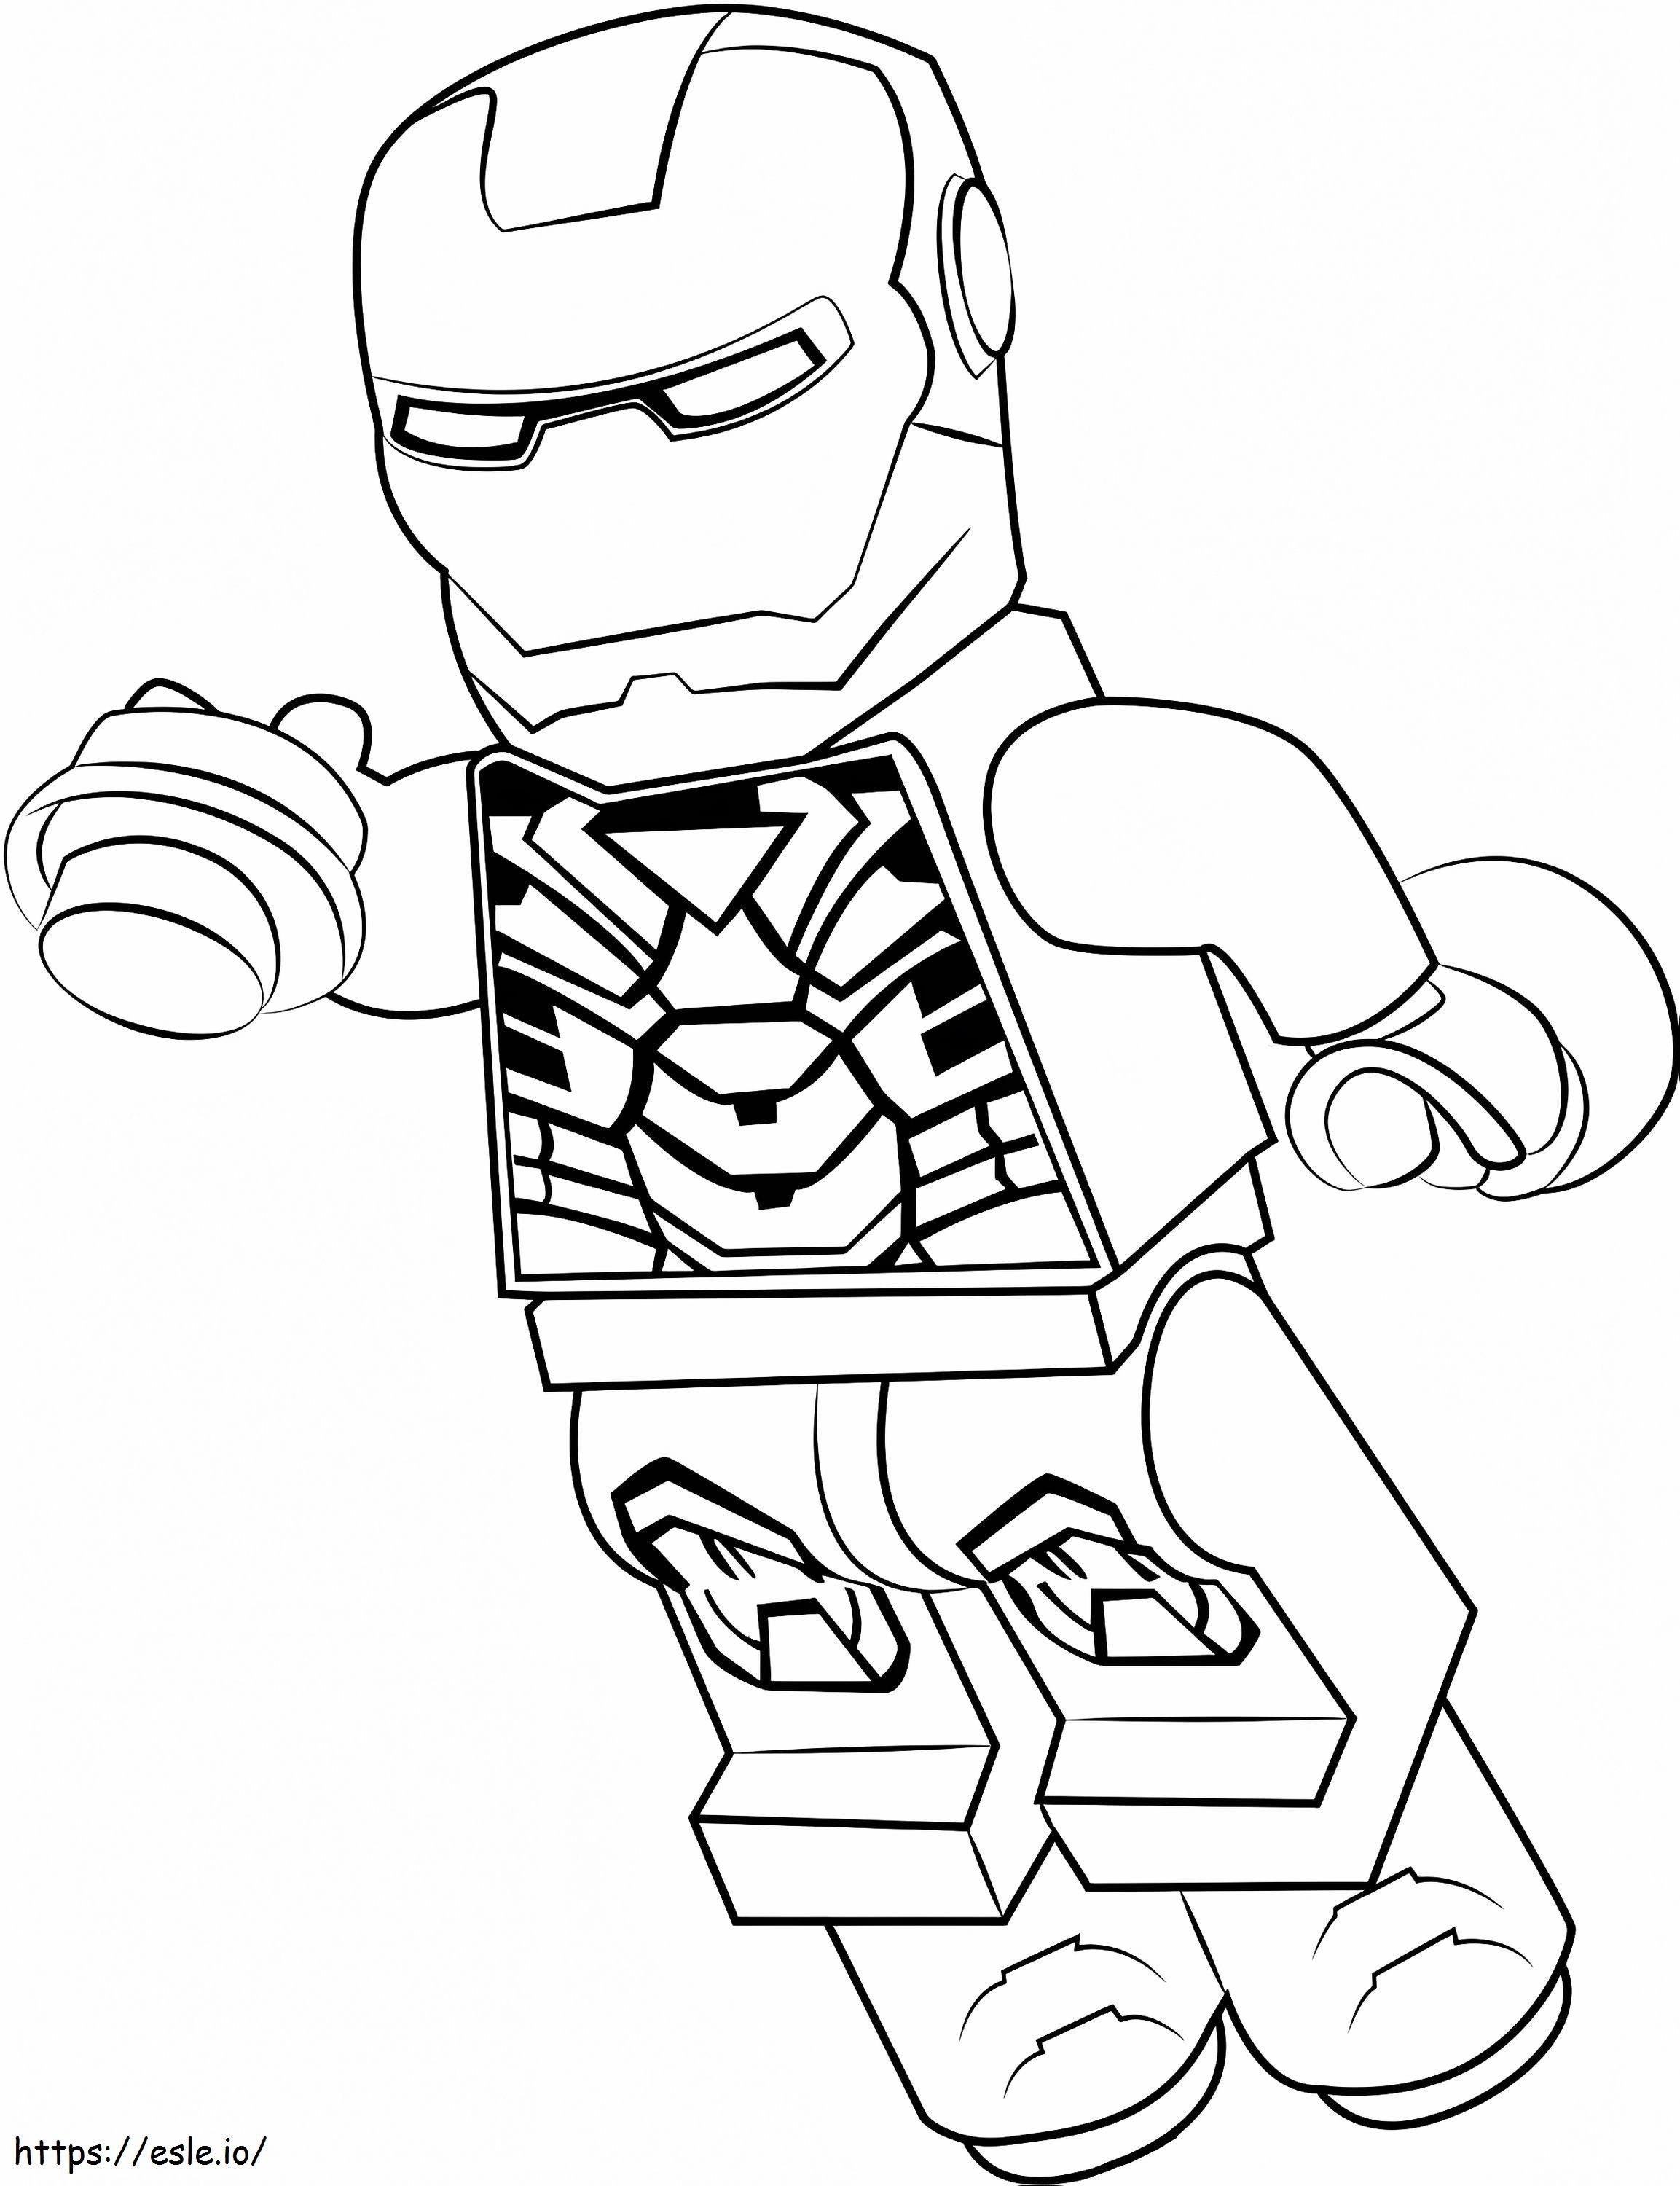 Lego Homem de Ferro legal para colorir